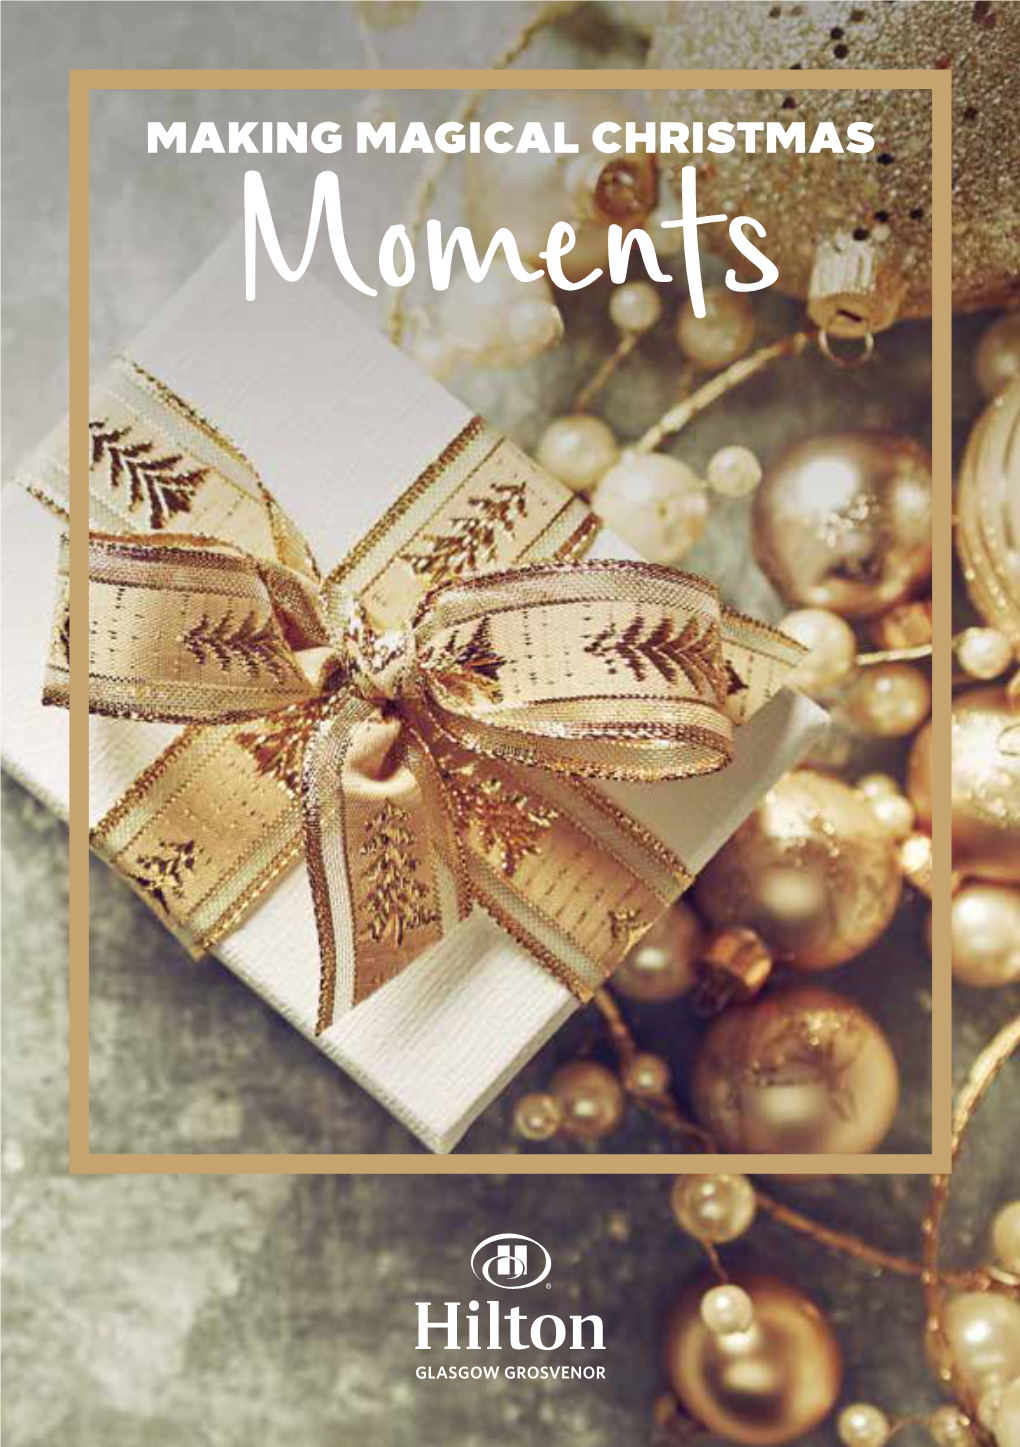 MAKING MAGICAL CHRISTMAS Moments “Christmas!Tis the Season for Kindling the Fire of Hospitality…” — Washington Irving UNFORGETTABLE